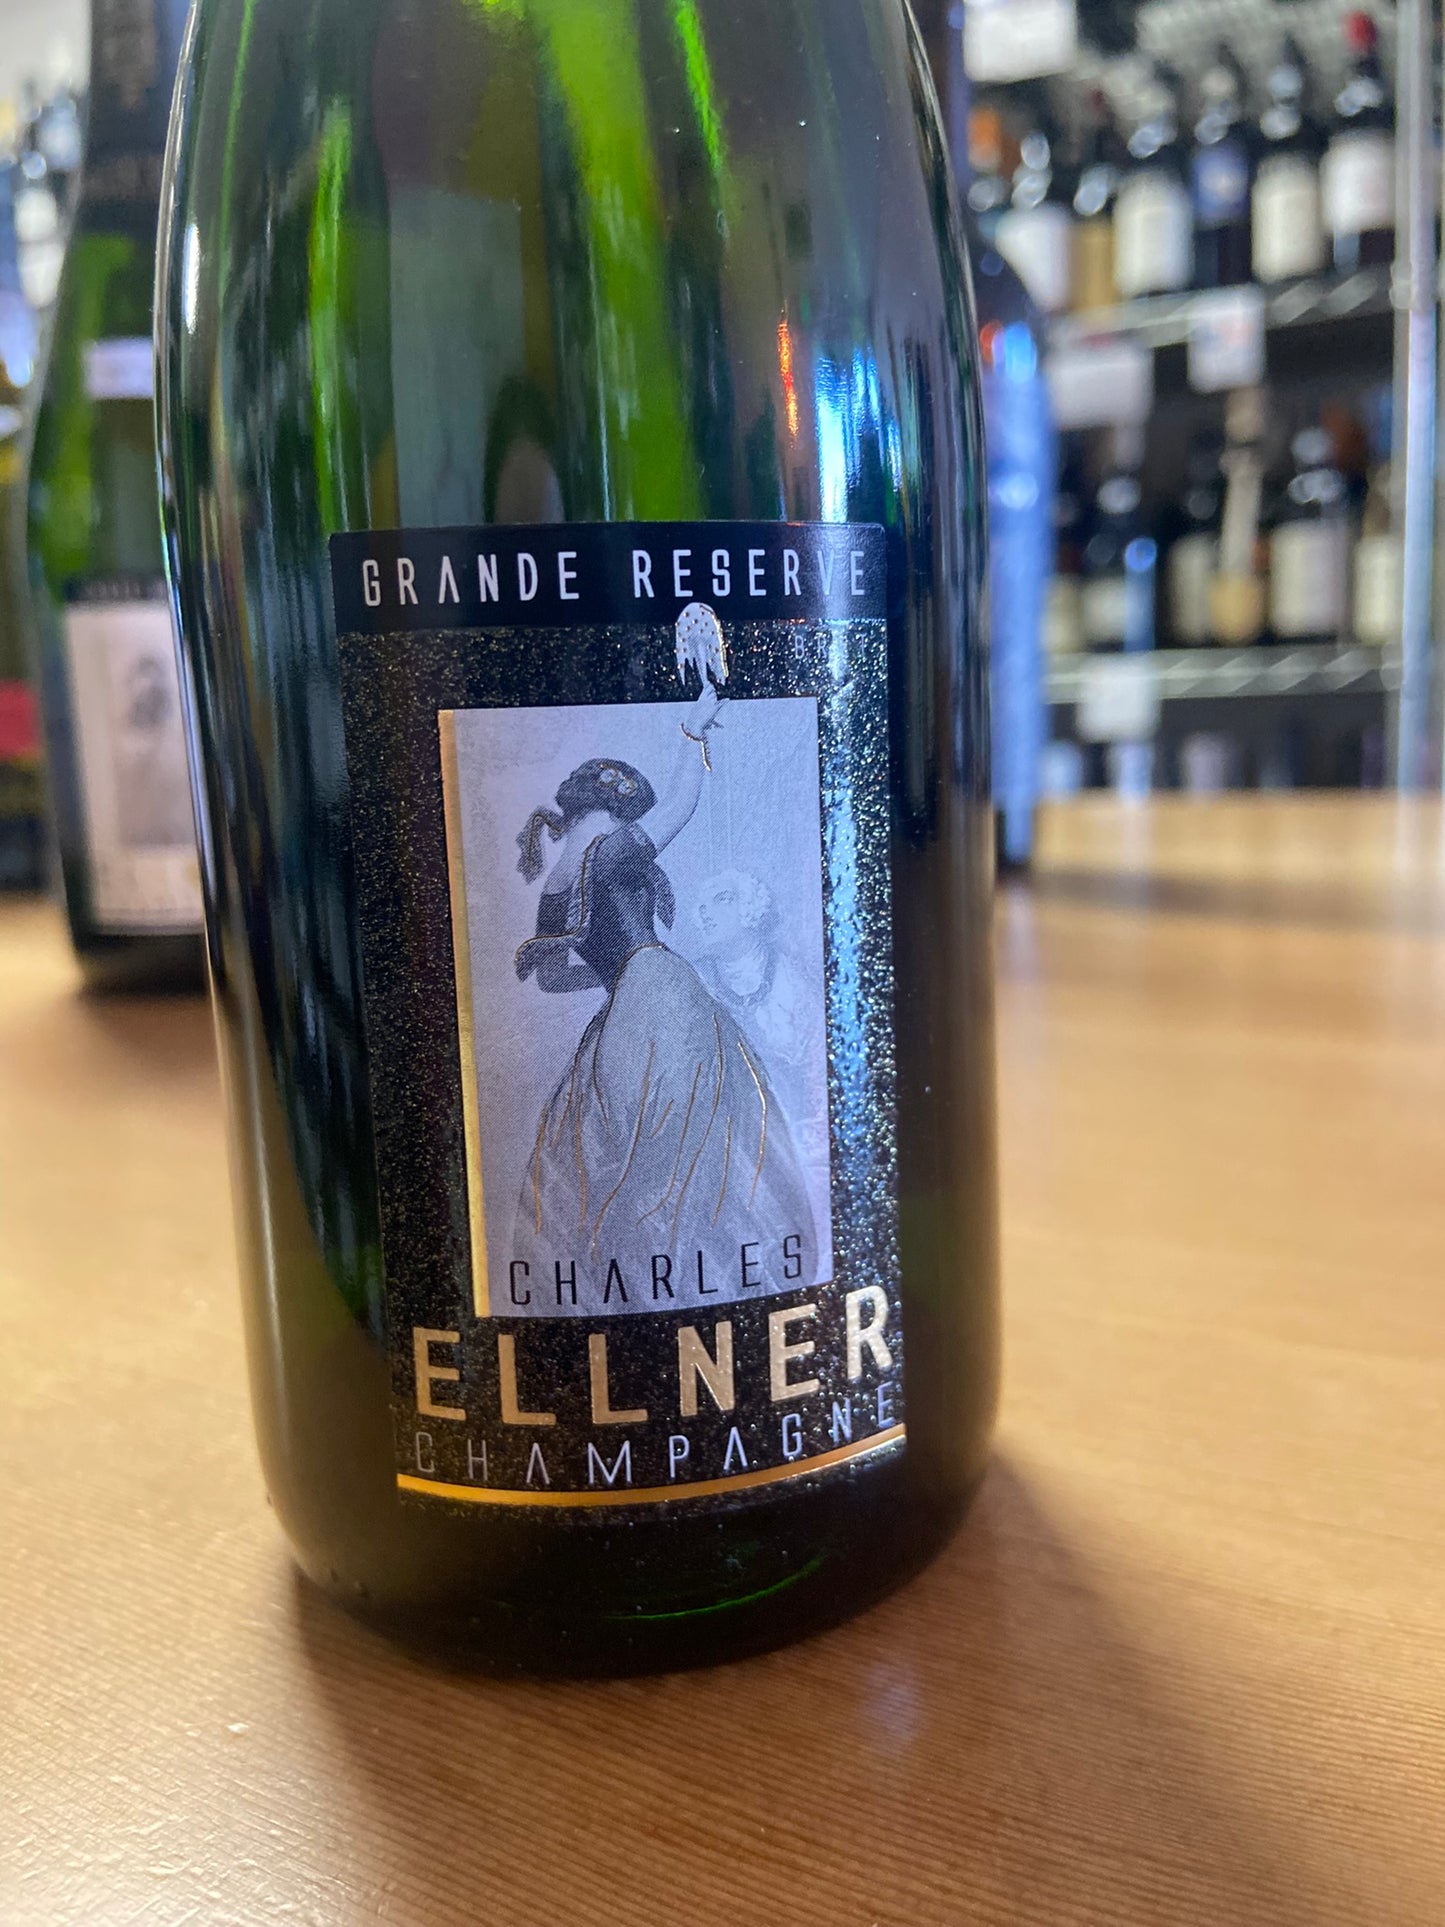 CHARLES ELLNER NV Champagne 'Grand Reserve Brut' 375 ml (Champagne, France)